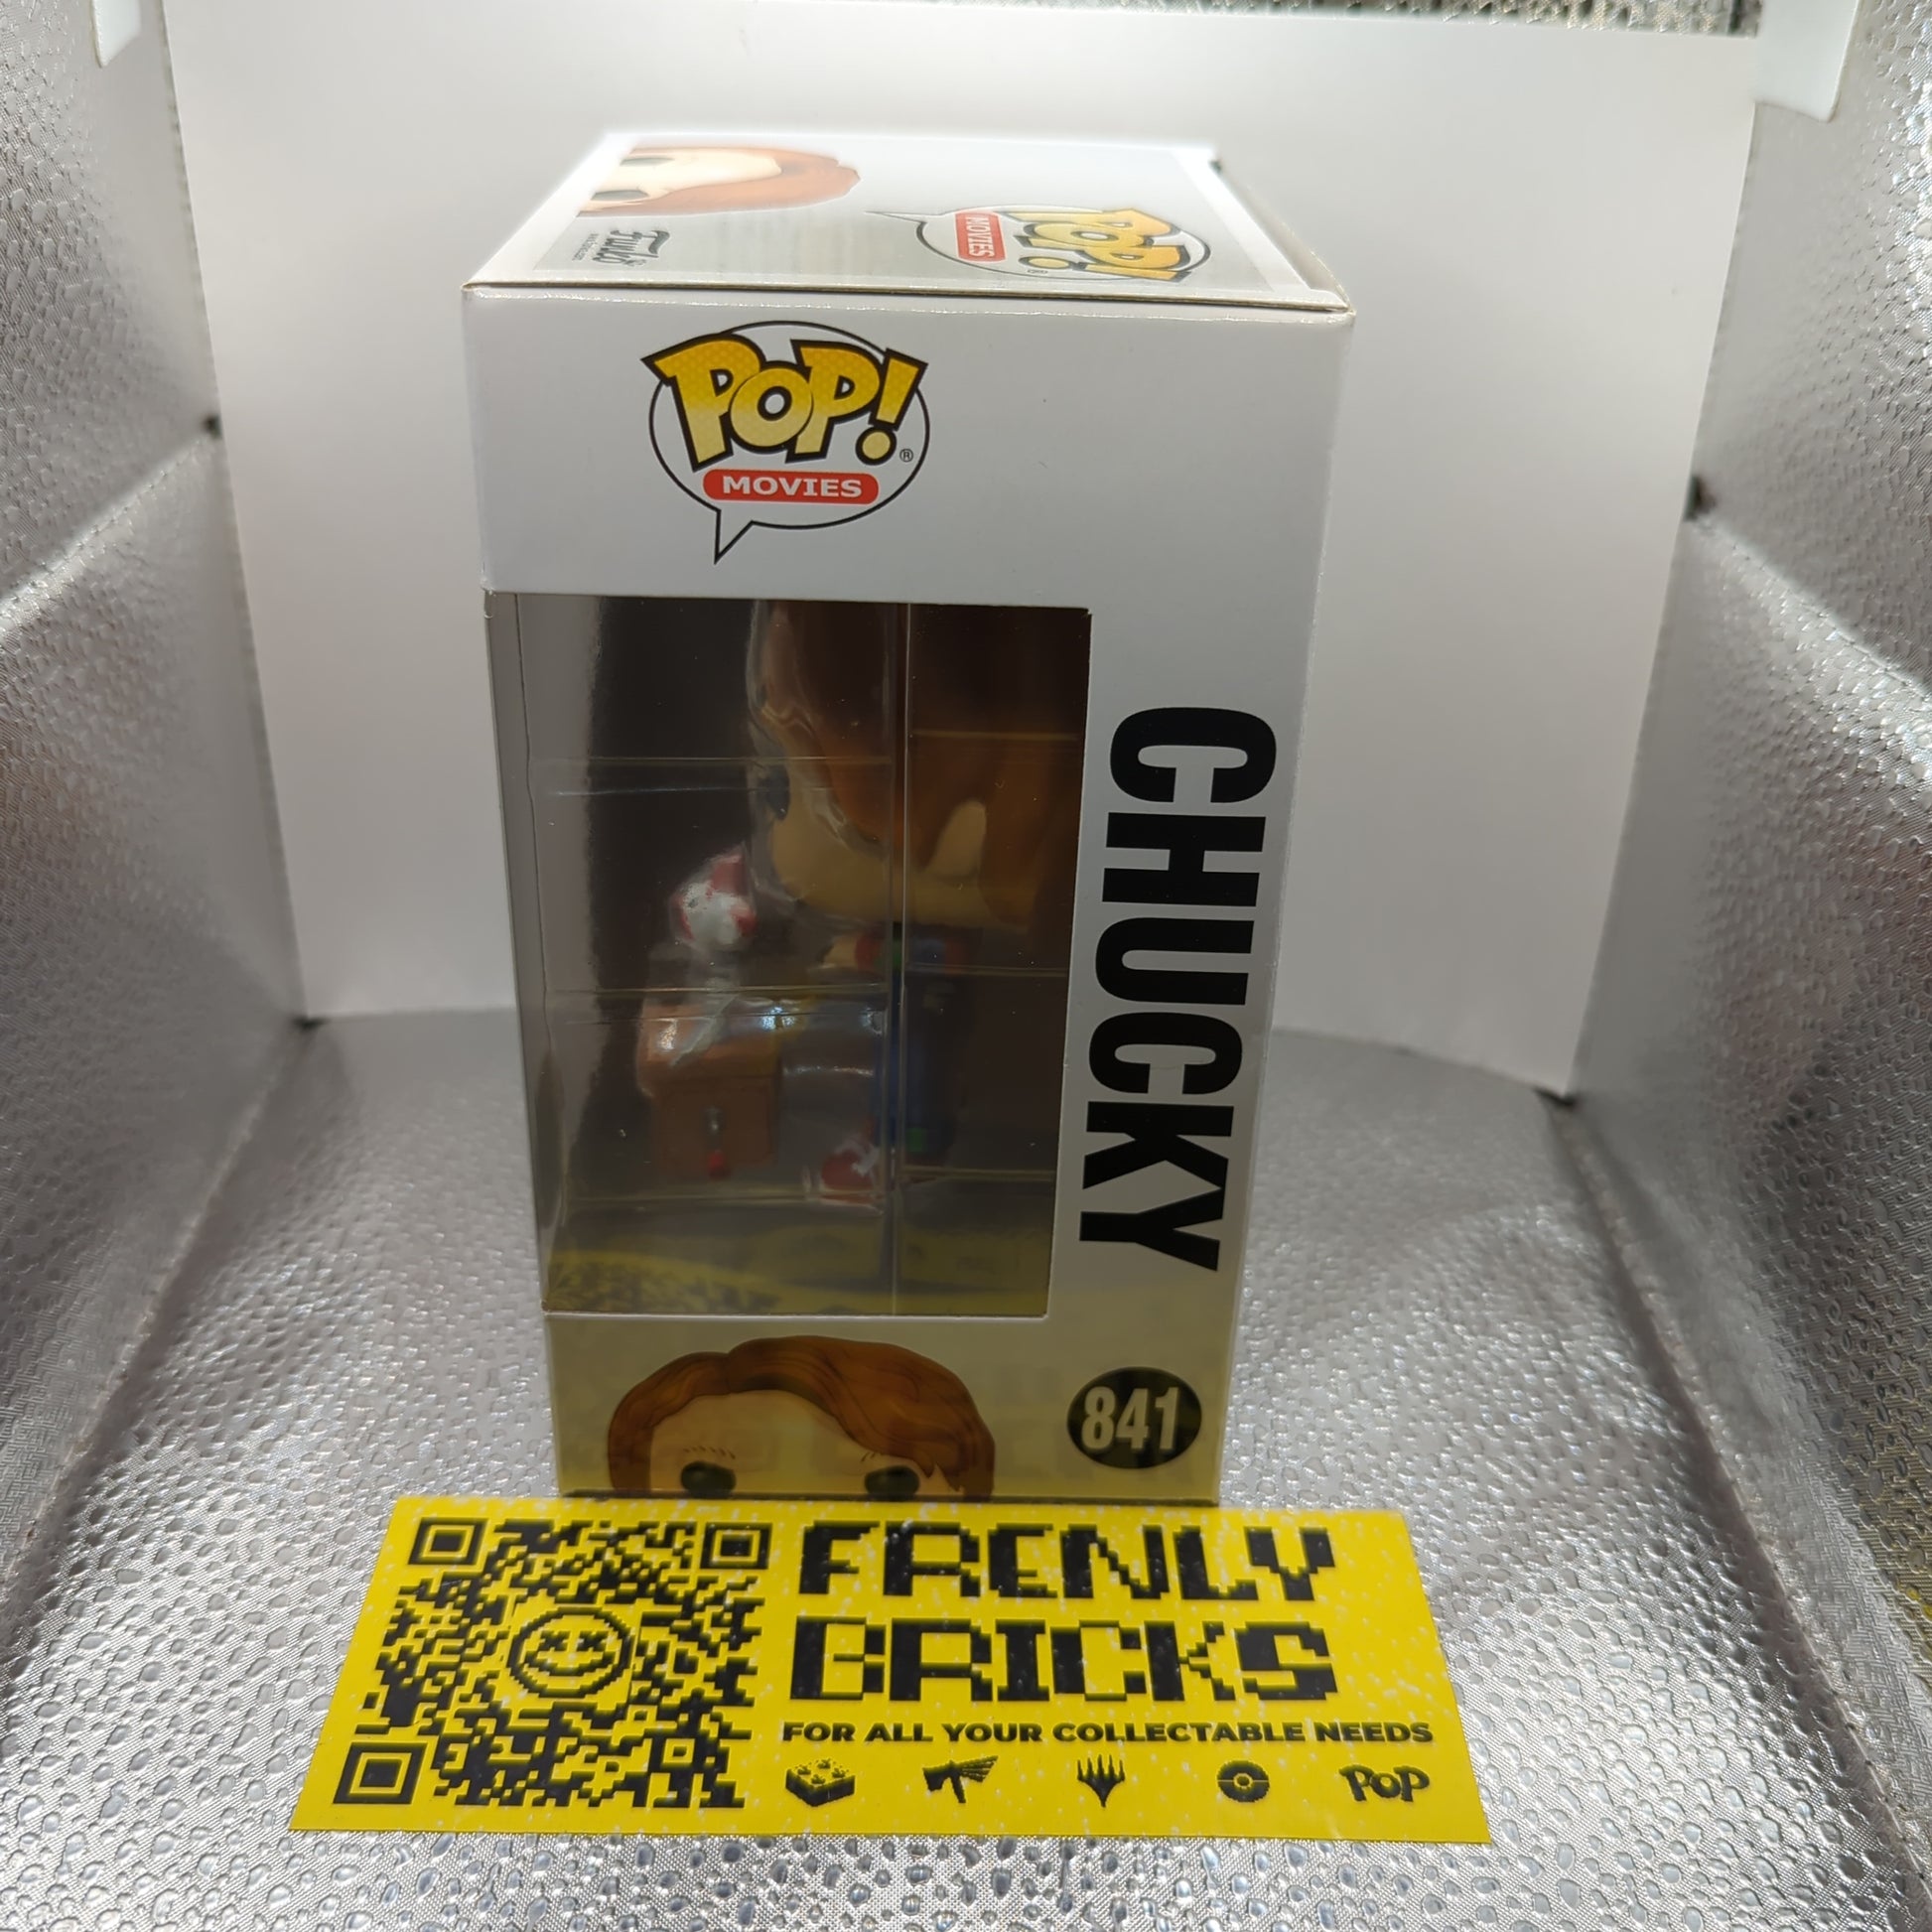 Chucky Child’s Play 2 Funko Pop! Vinyl #841 Special Edition FRENLY BRICKS - Open 7 Days